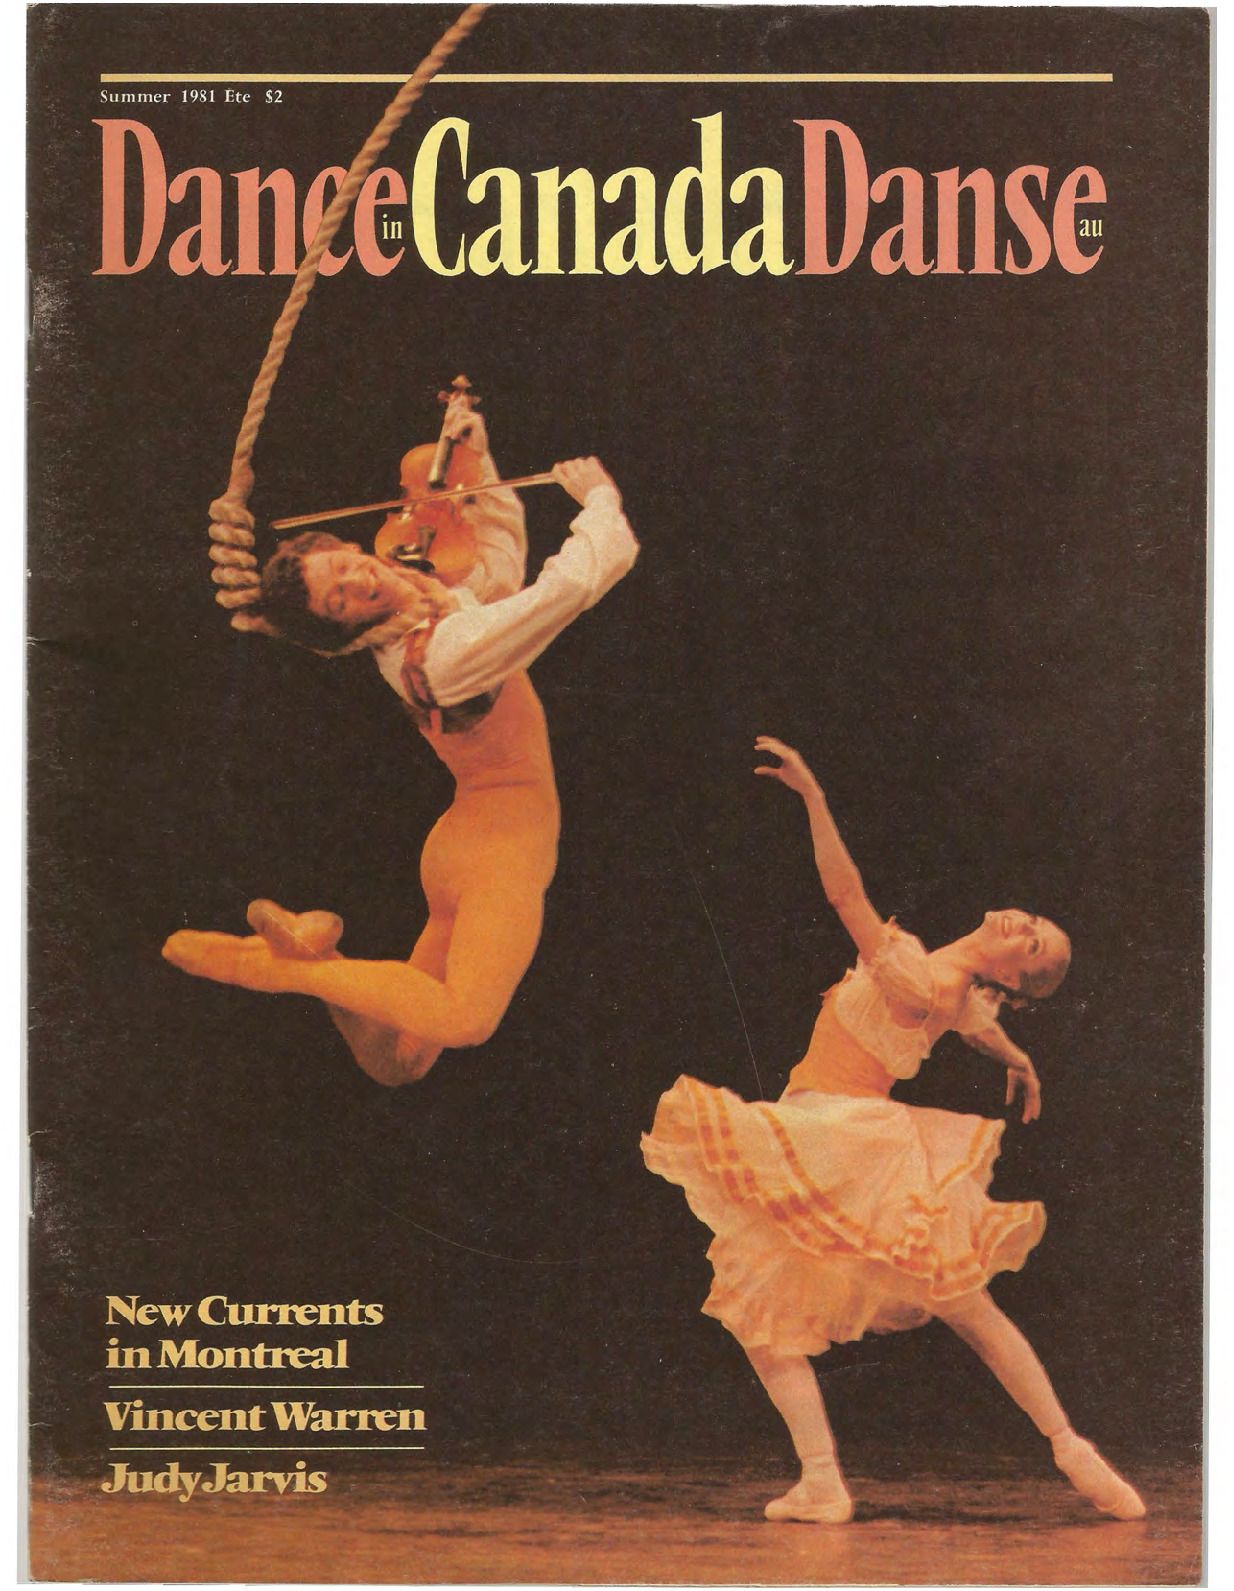 Dance in Canada Magazine No 28 Summer 1981 compressed.pdf